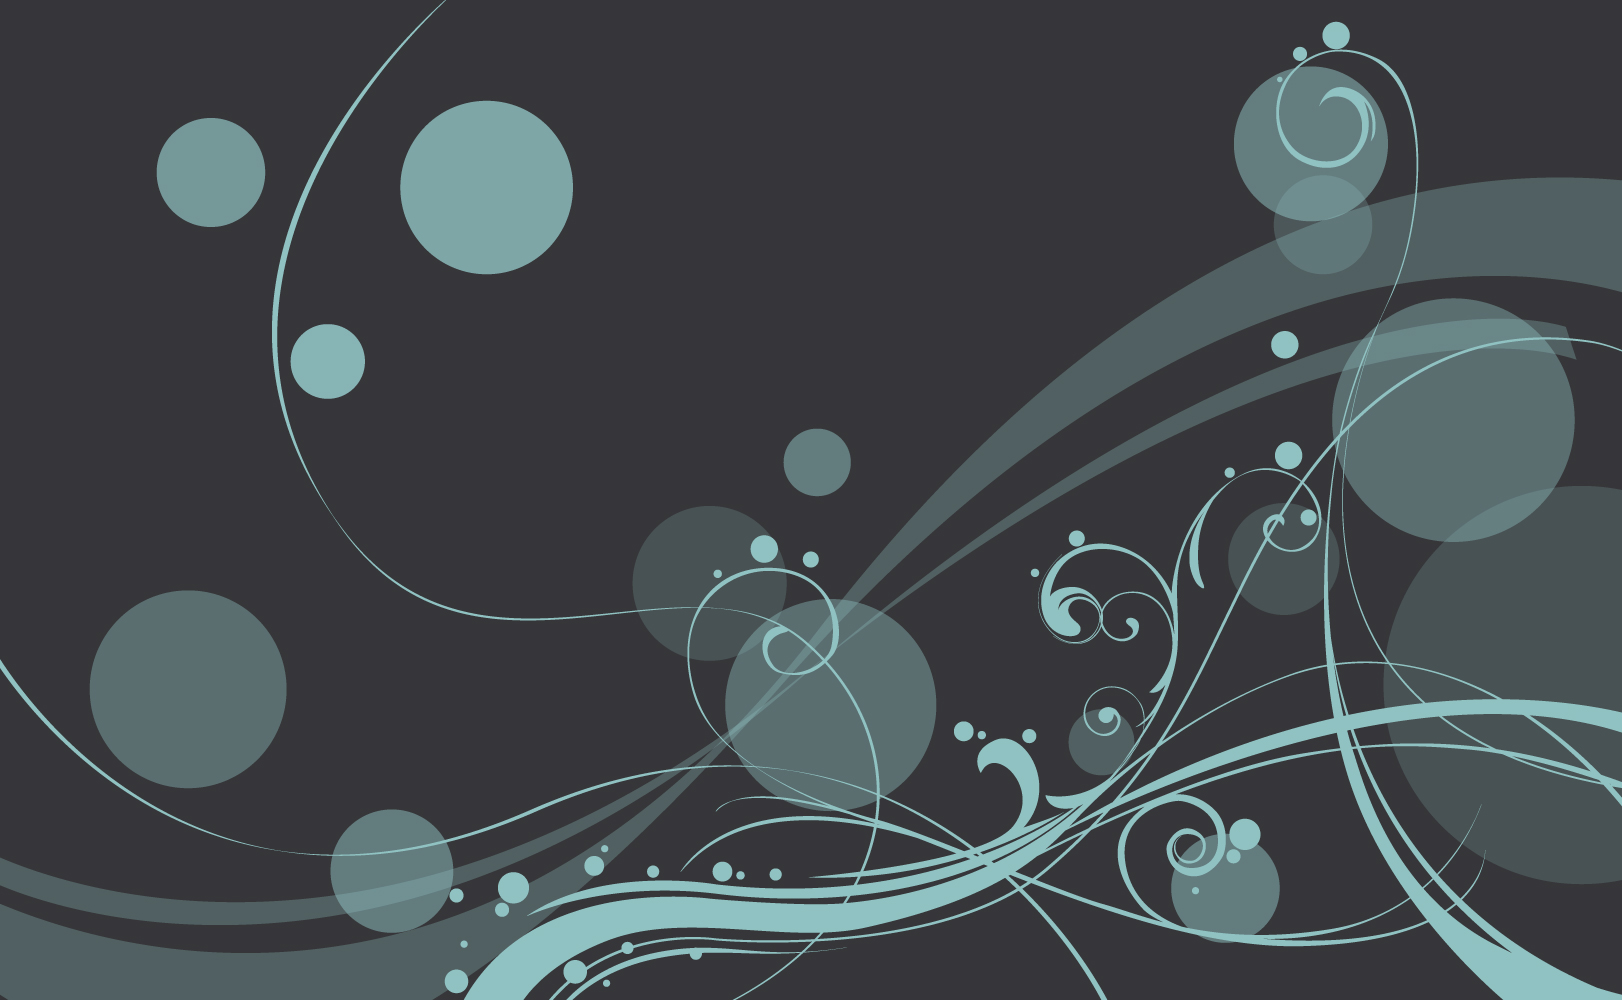 Swirls, Flowers, Circles: A Free Vector Graphics Set – Smashing ...